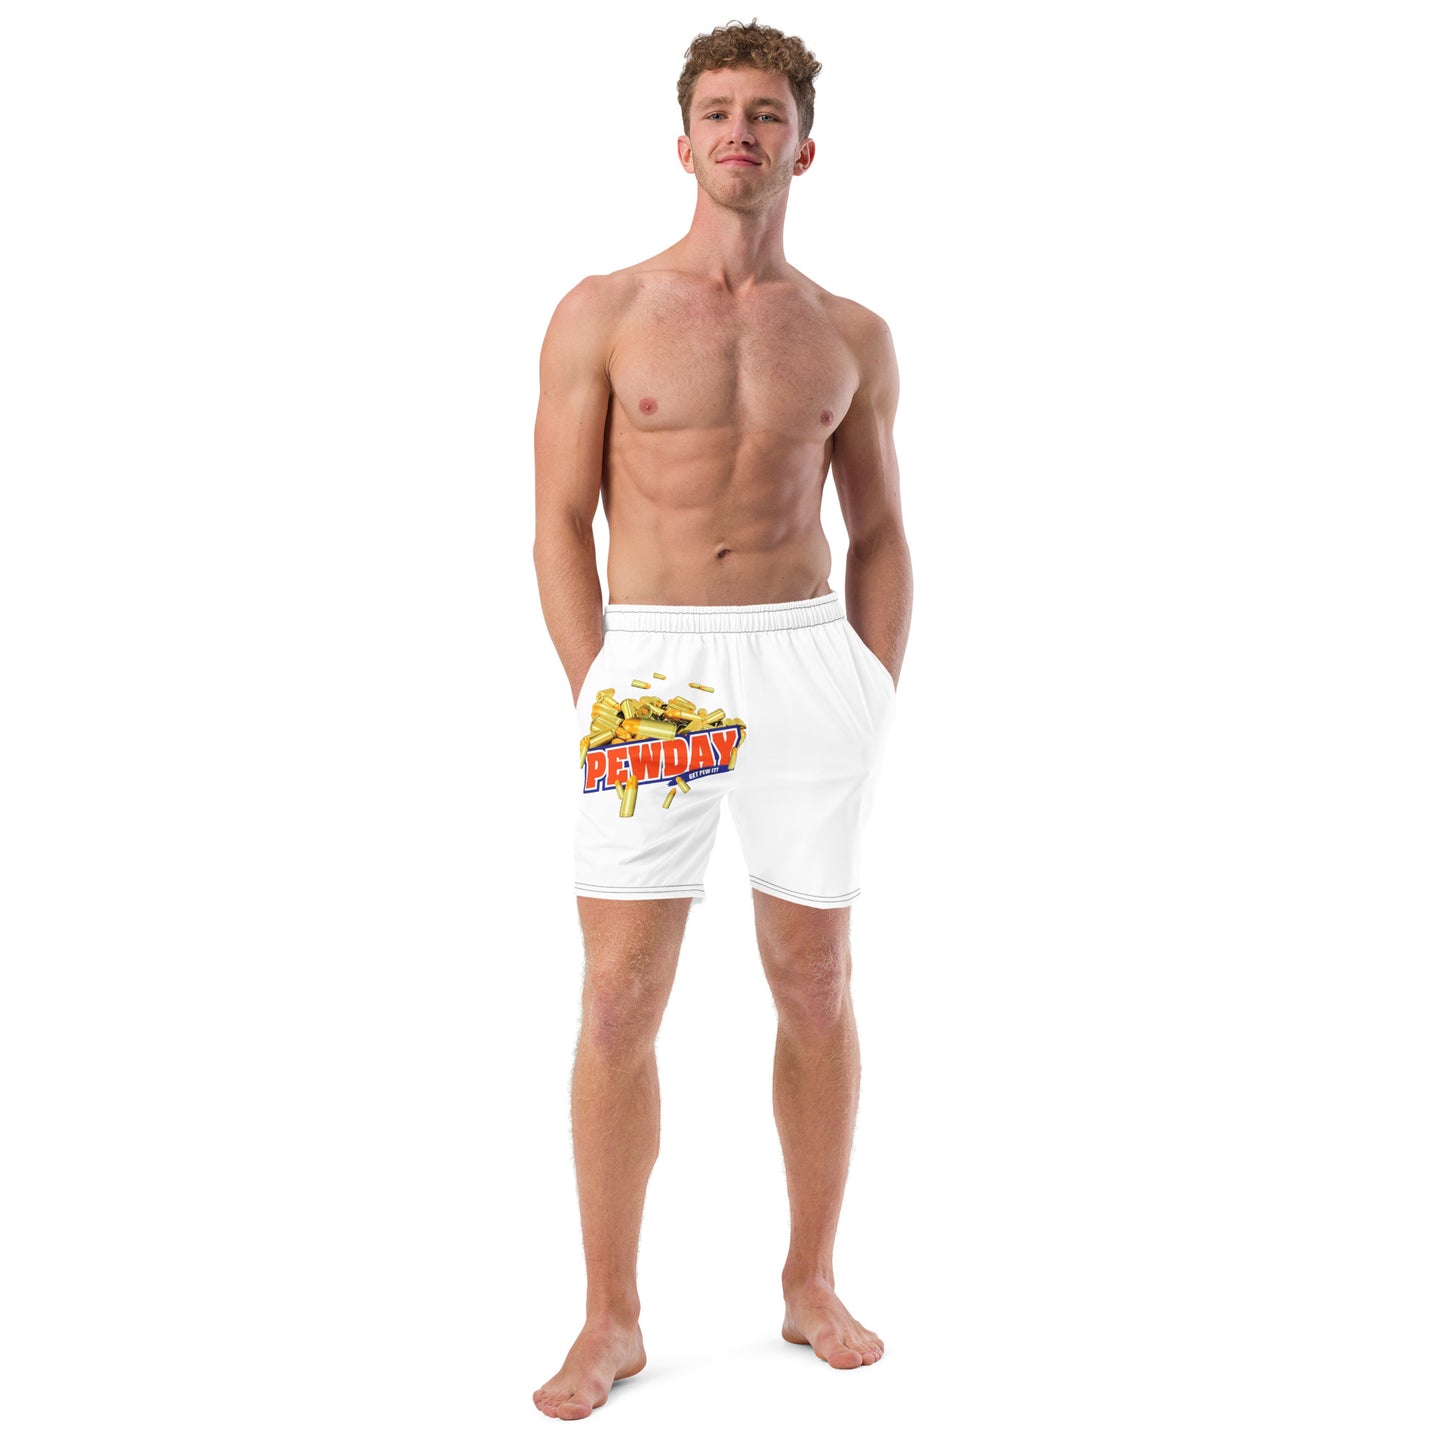 PEWDAY CANDY Men's swim trunks